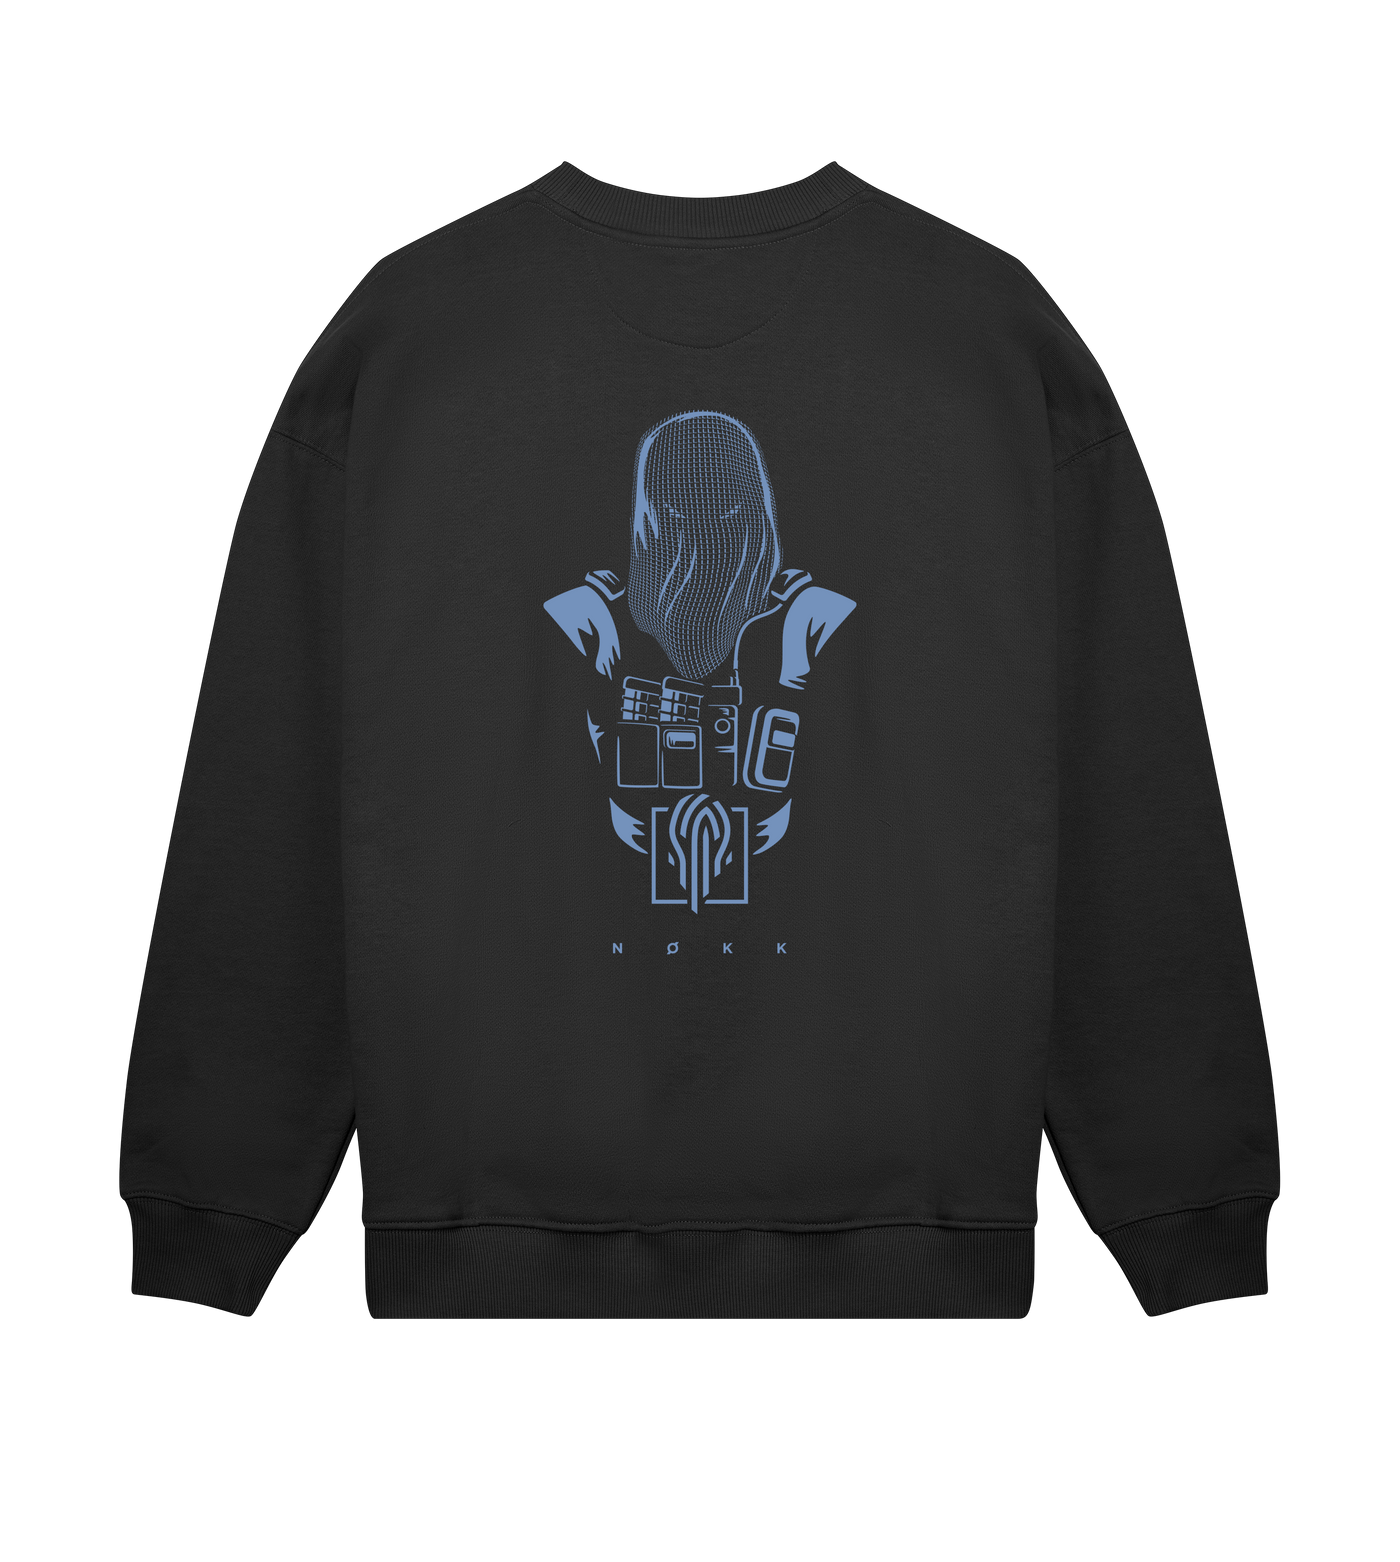 6 SIEGE - Nokk Black Sweatshirt